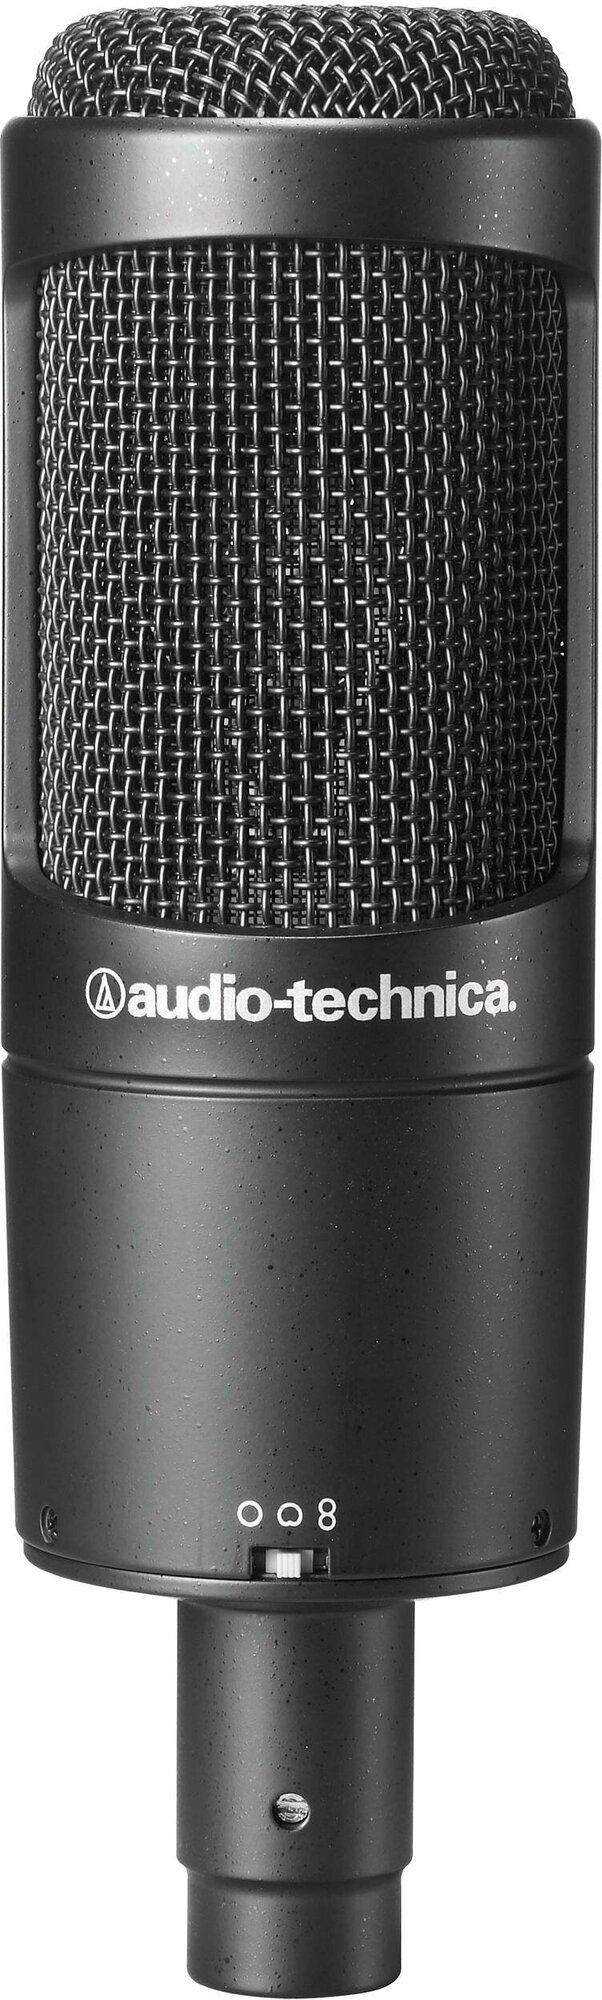 Микрофон Audio-Technica - фото №20